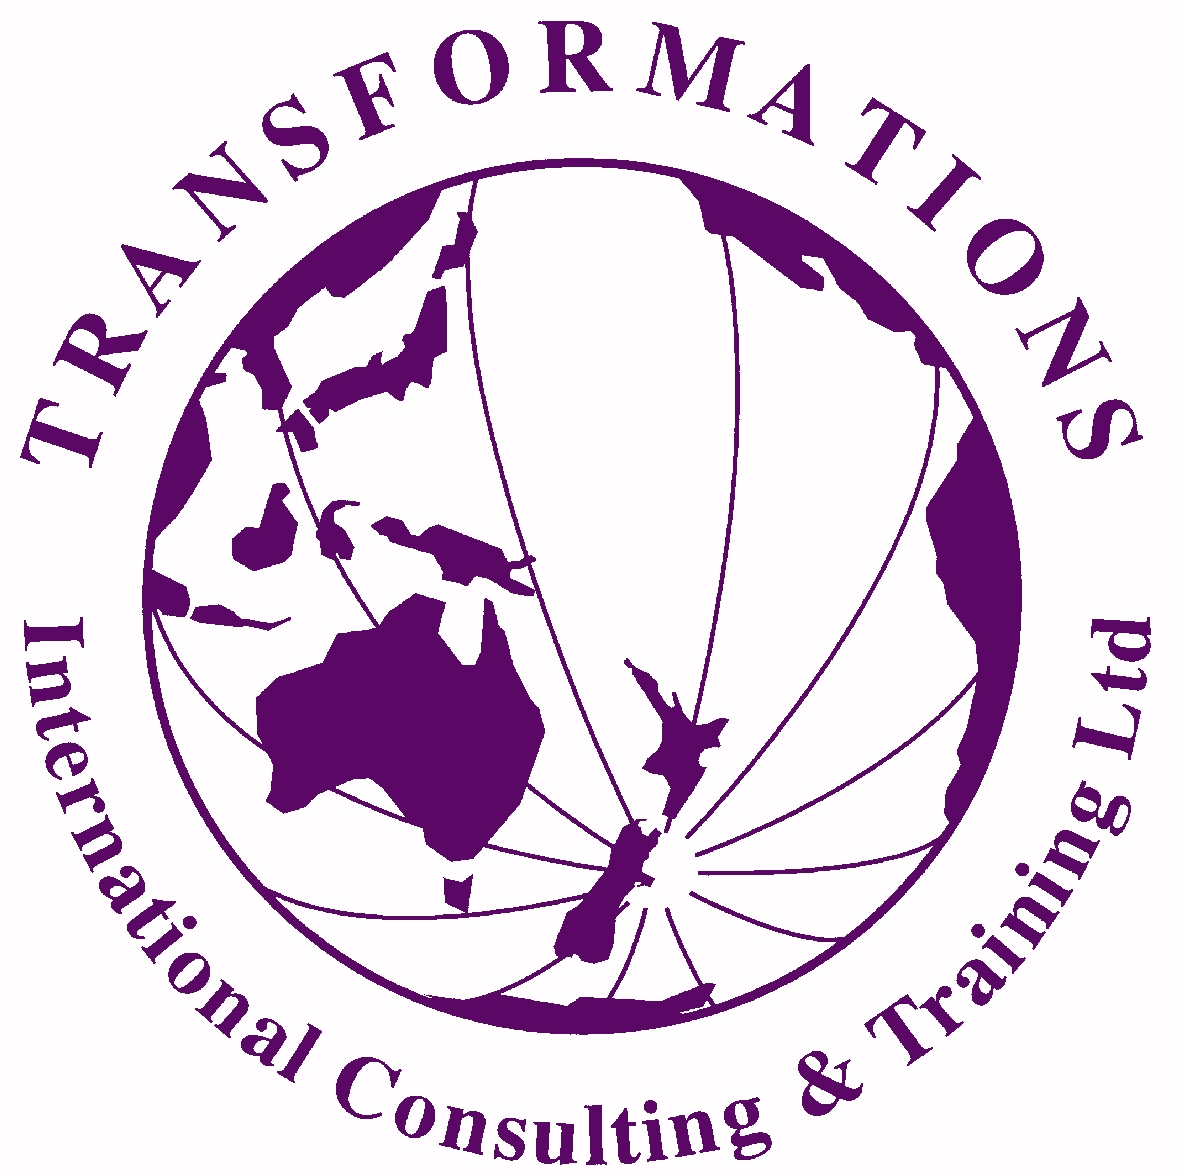 Transformations International Consulting & Trainings